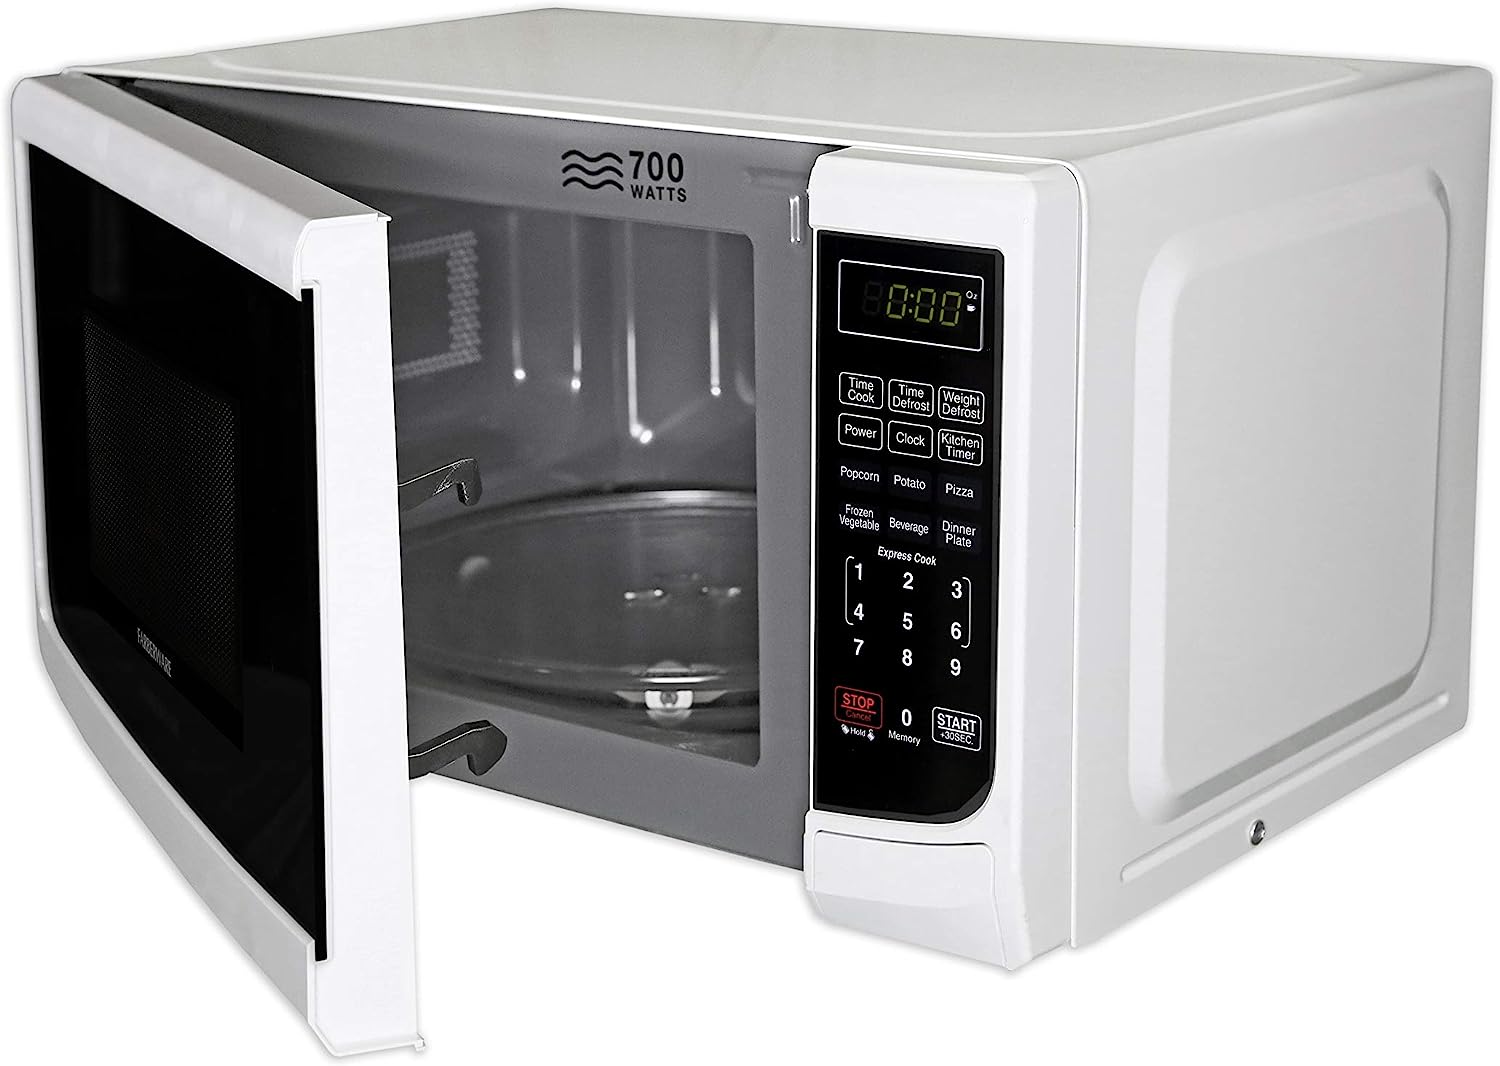 Retro 0.7 Cubic Foot 700-Watt Countertop Microwave Oven - Black